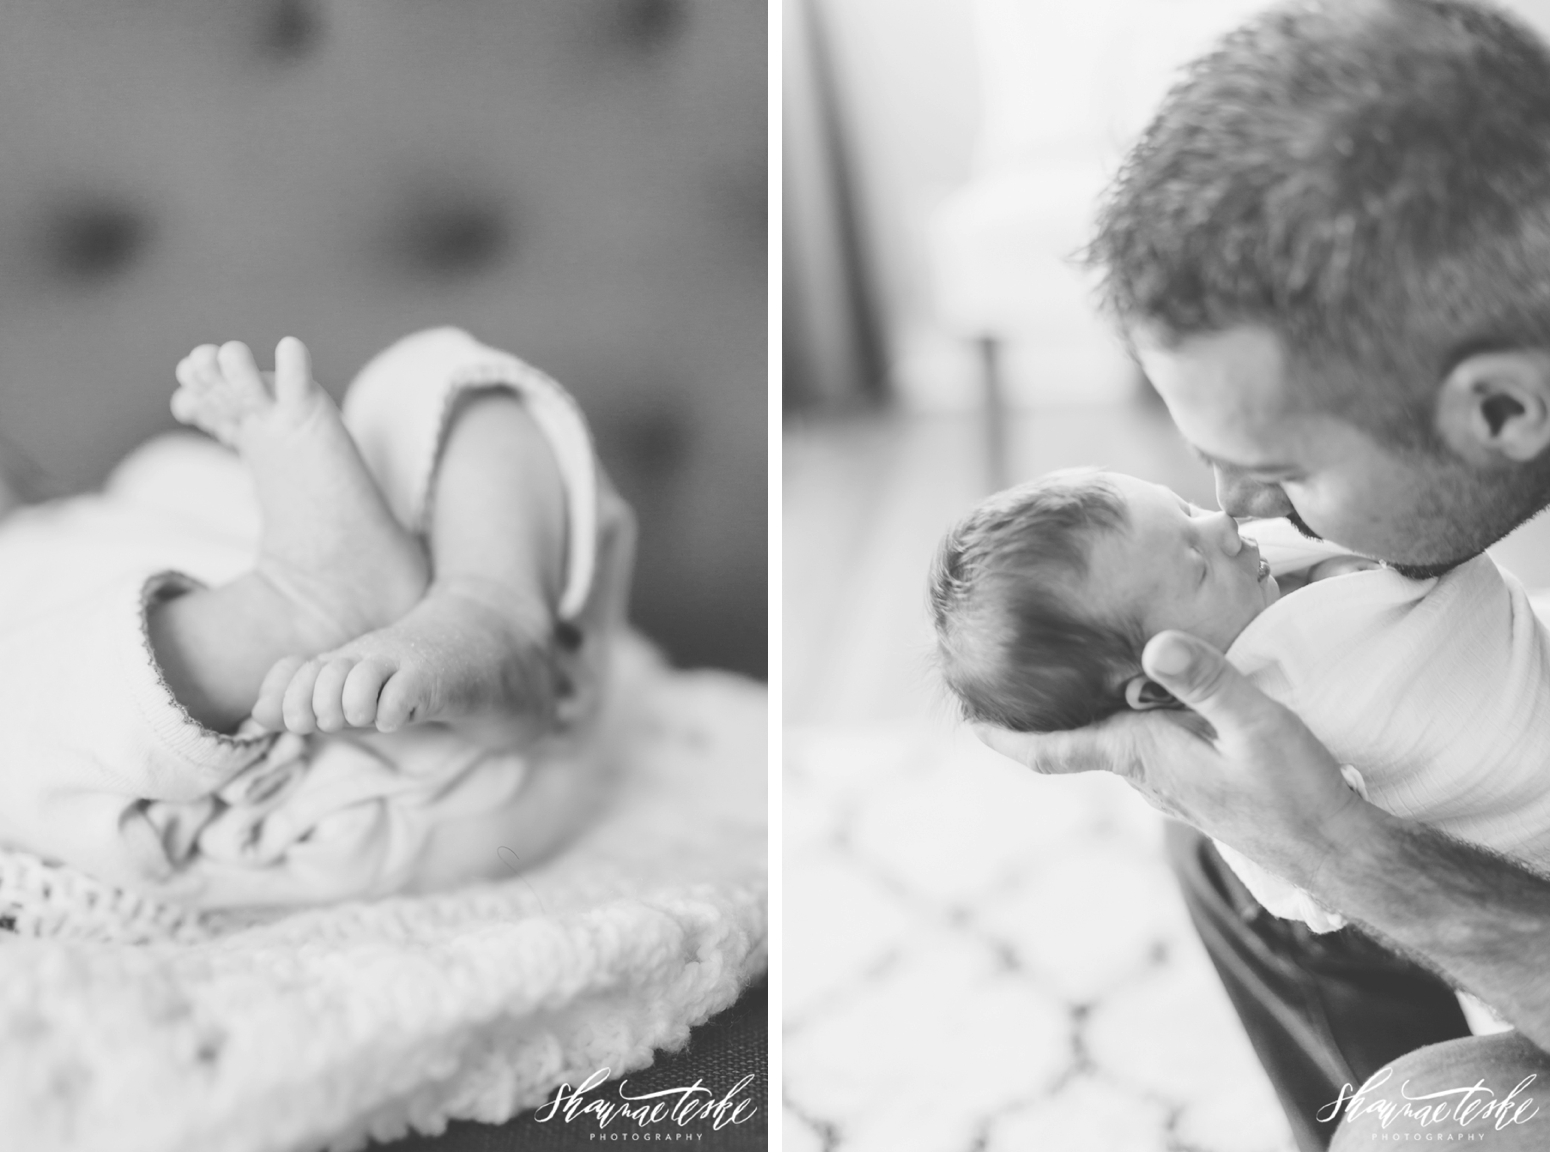 shaunae_teske_wisconsin_photographer_at-home-newborn-session-wisconsin-kathryn-158